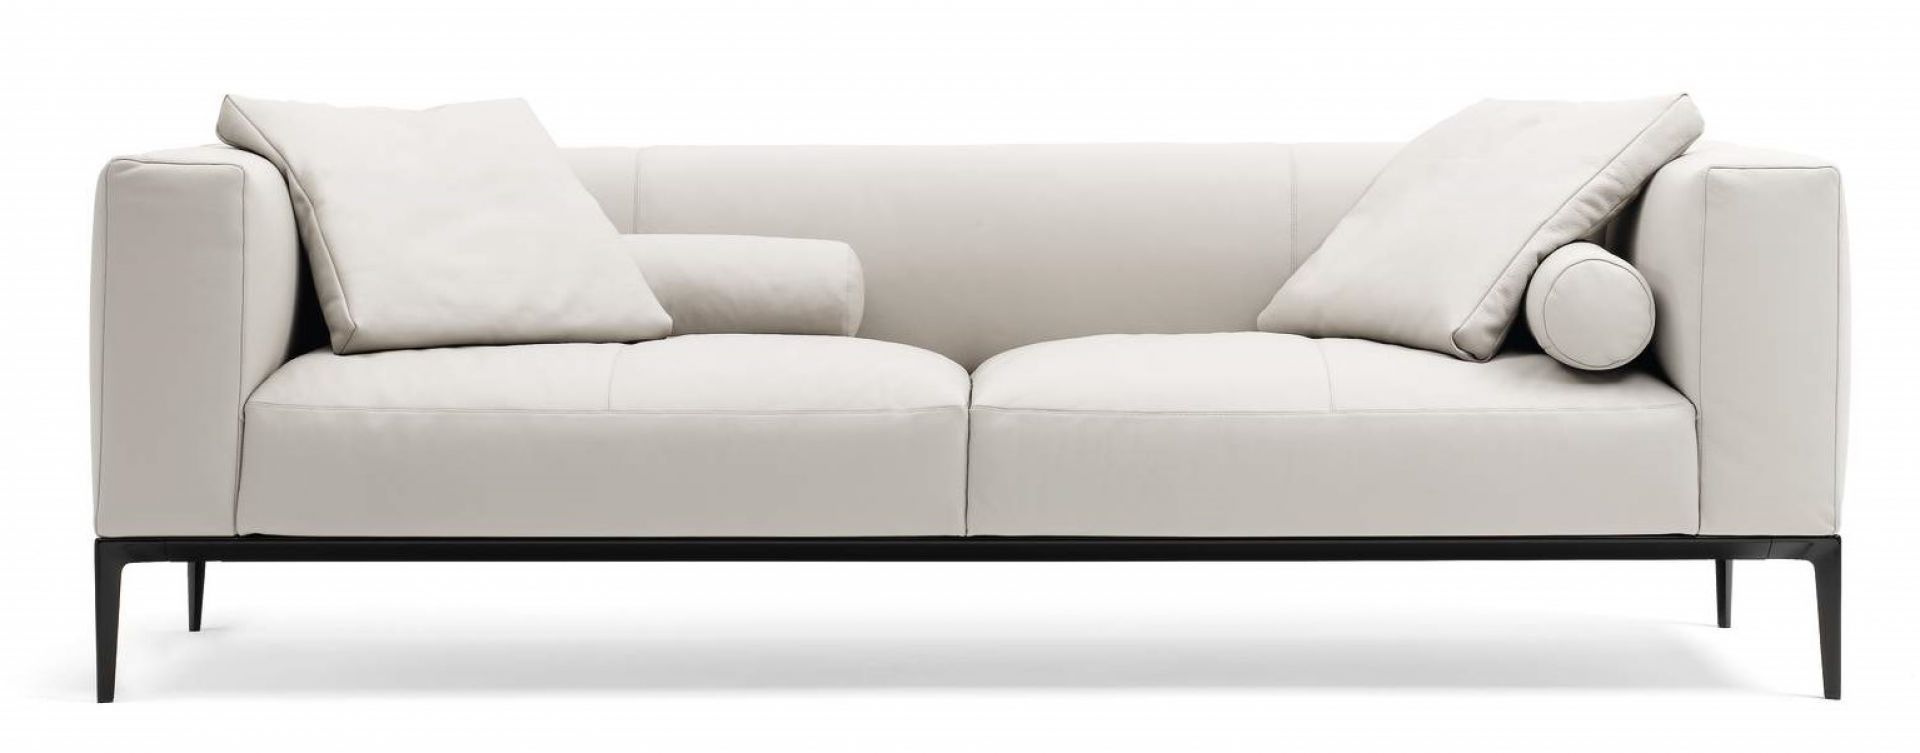 jaan living konfigurierbares sofa walter knoll